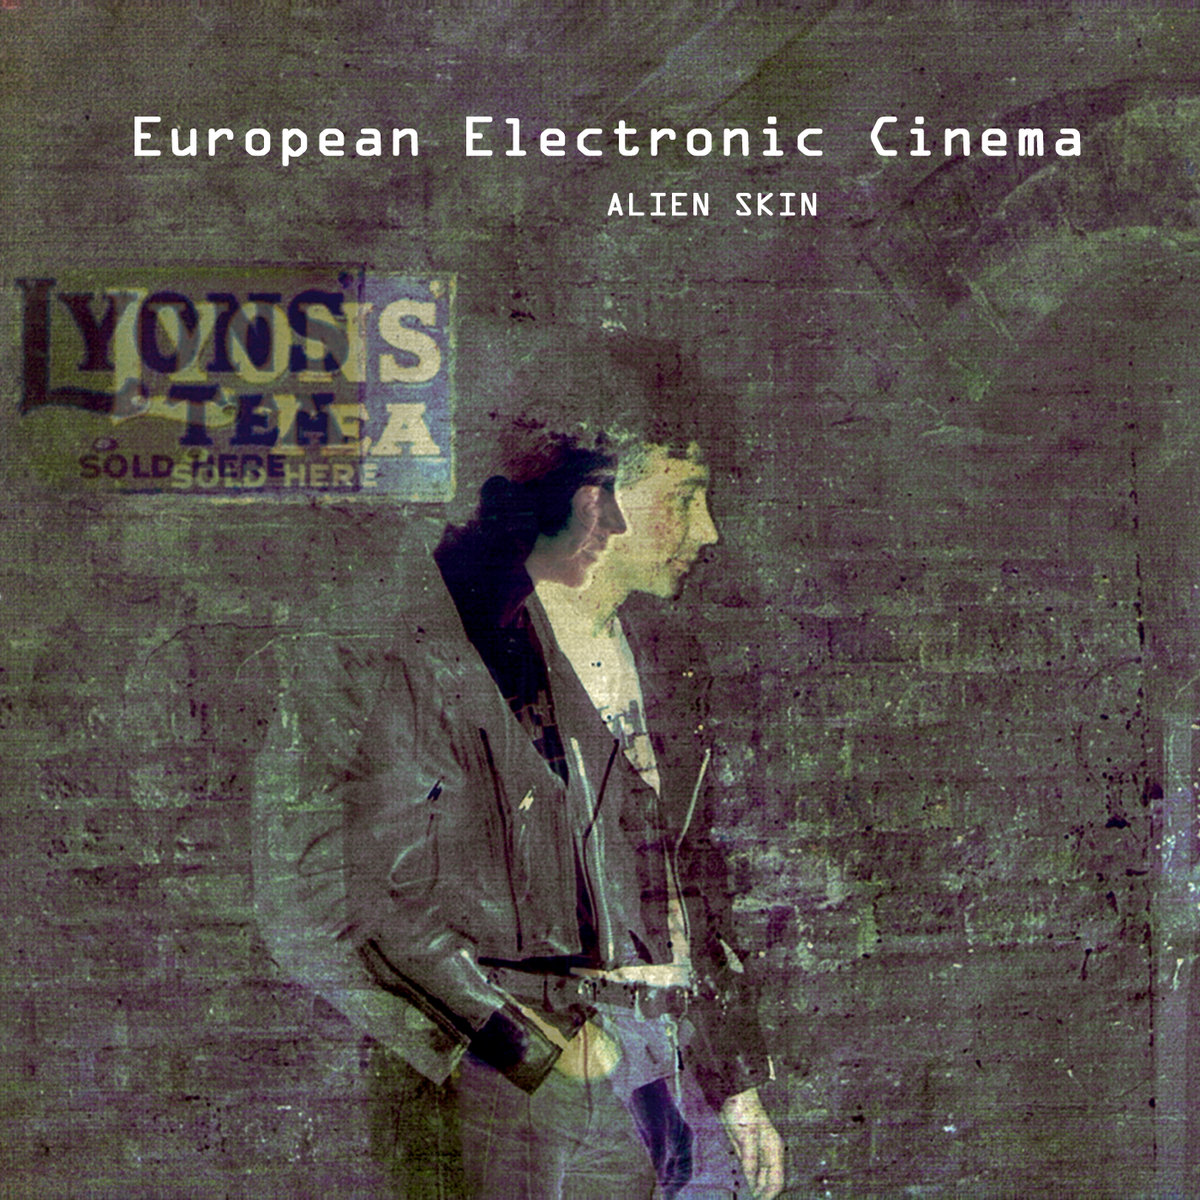  Alien Skin – European Electronic Cinema